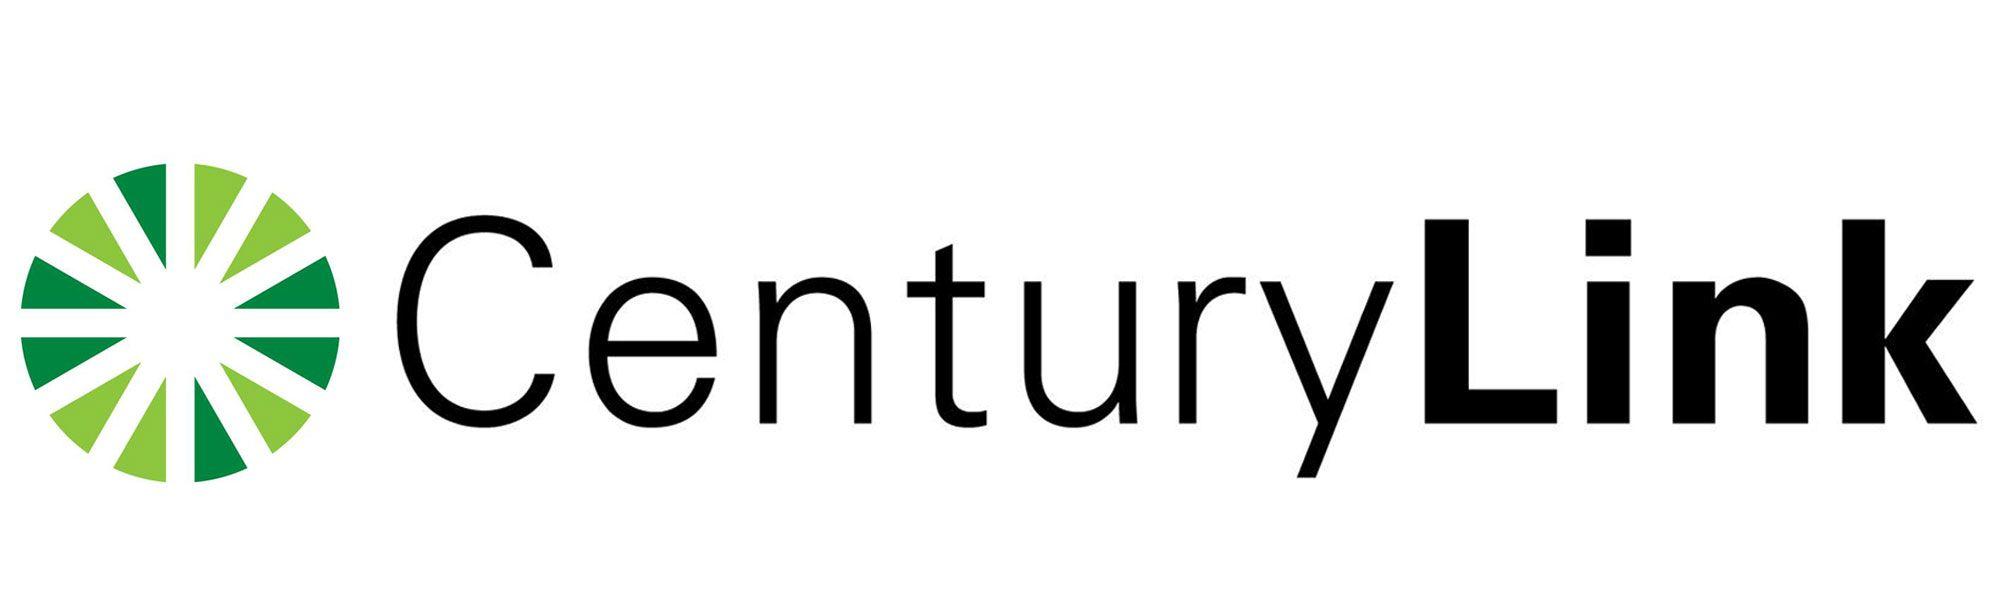 CenturyLink Logo - Centurylink County Chamber of Commerce